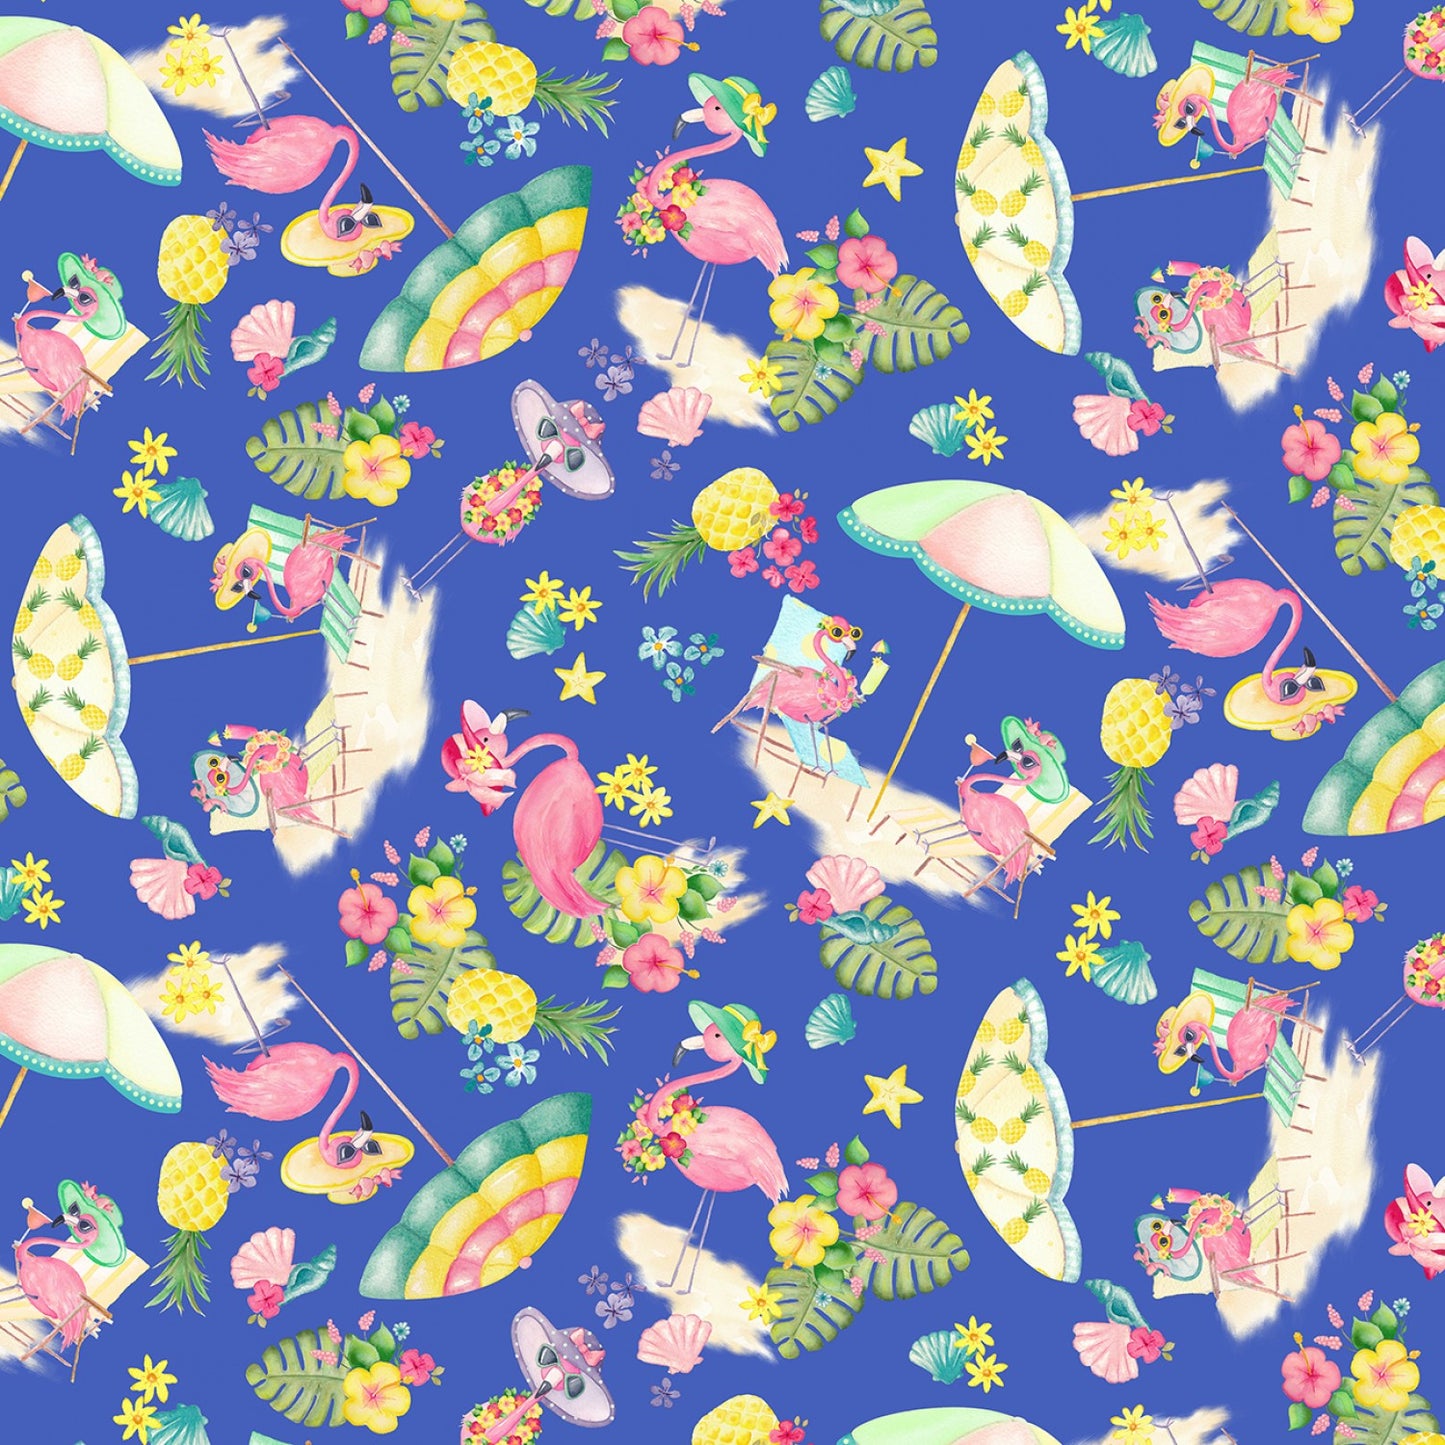 Fun in the Sun by Andi Metz Flamingo Paradise Medium Blue  12596B-52 Cotton Woven Fabric